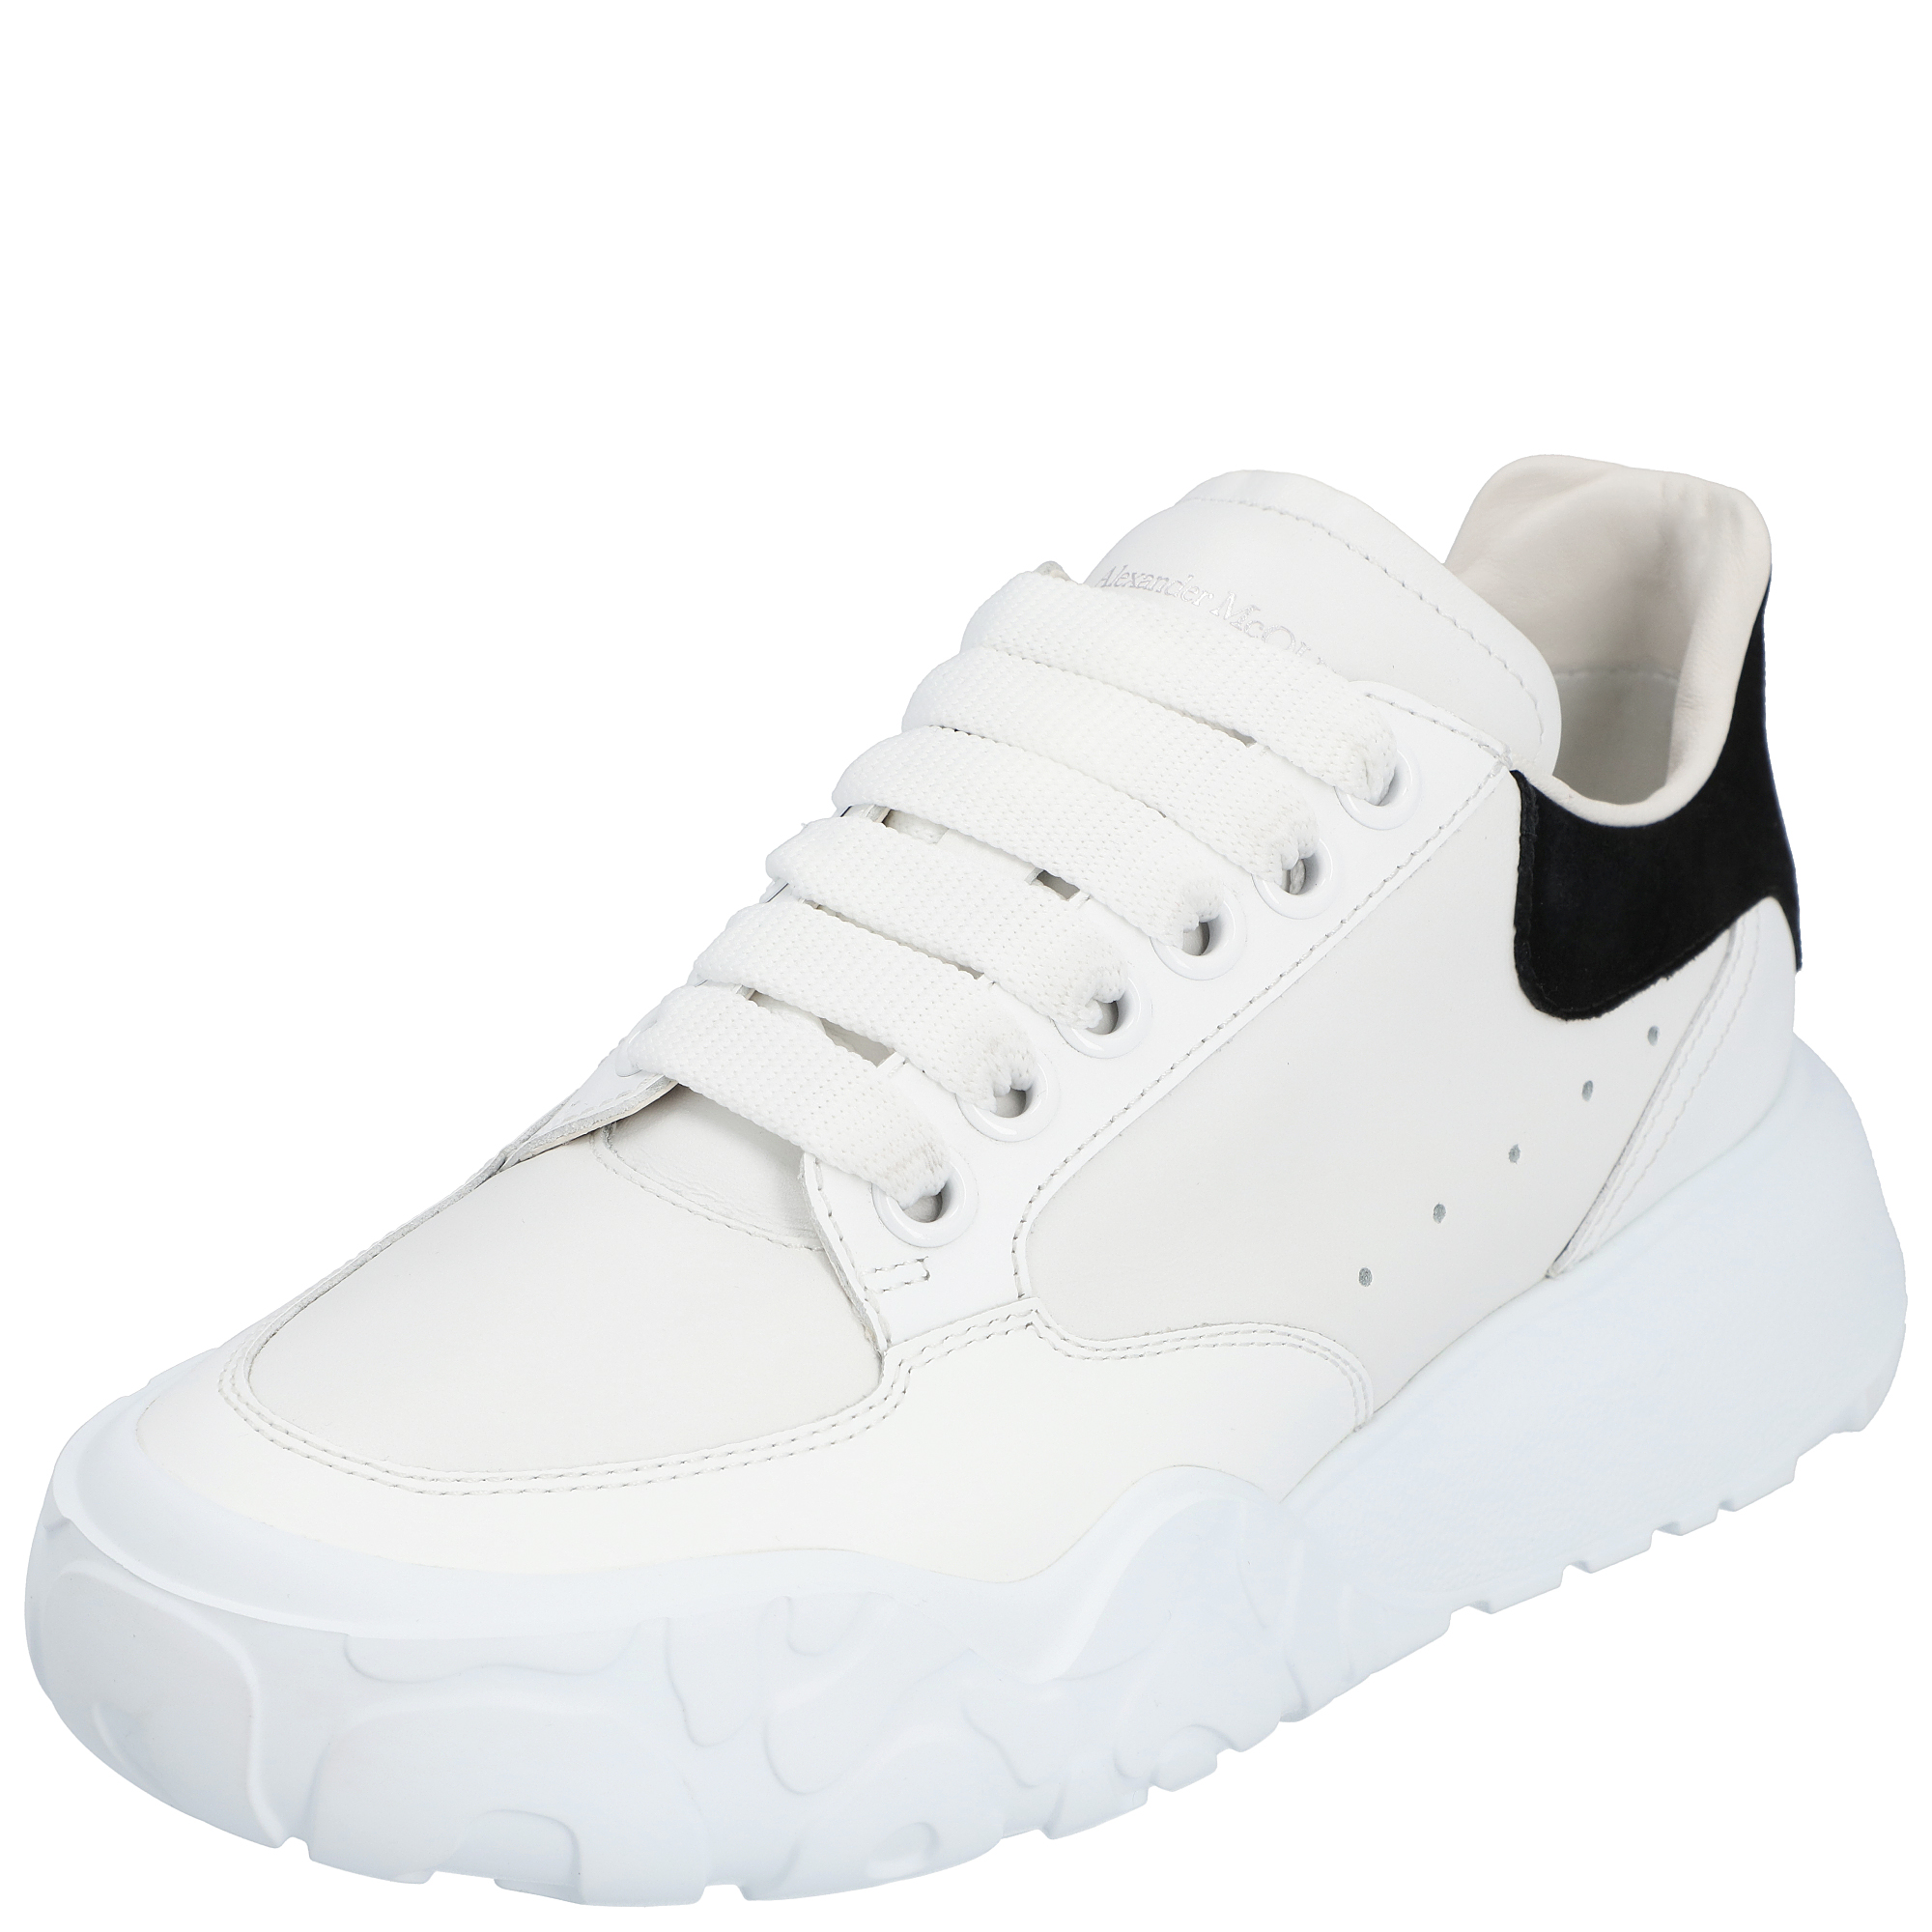 Alexander McQueen White/Black Leather Court Trainer Sneakers EU 38.5 (US 8/UK 5.5)